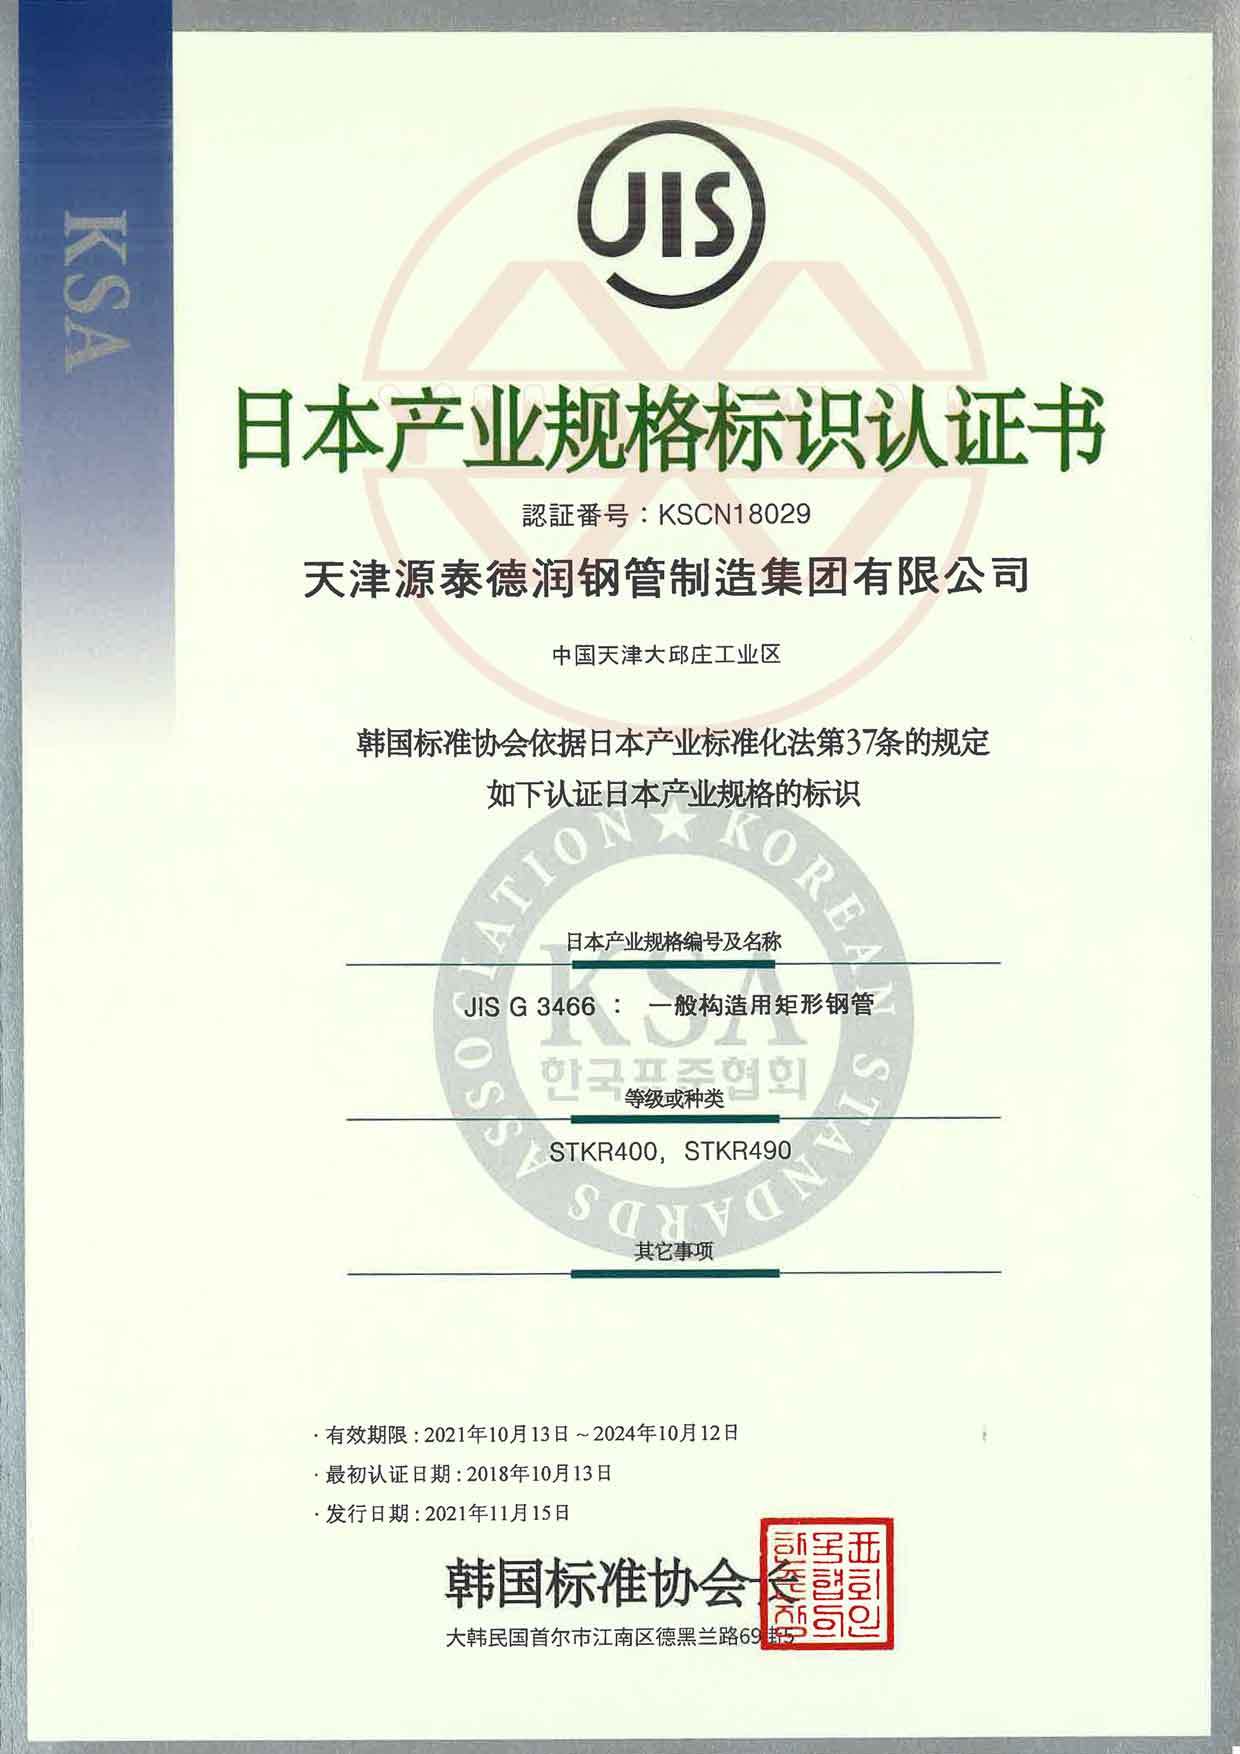 JIS-Tianjin Yuantai Derun Steel Pipe Manufacturing Group